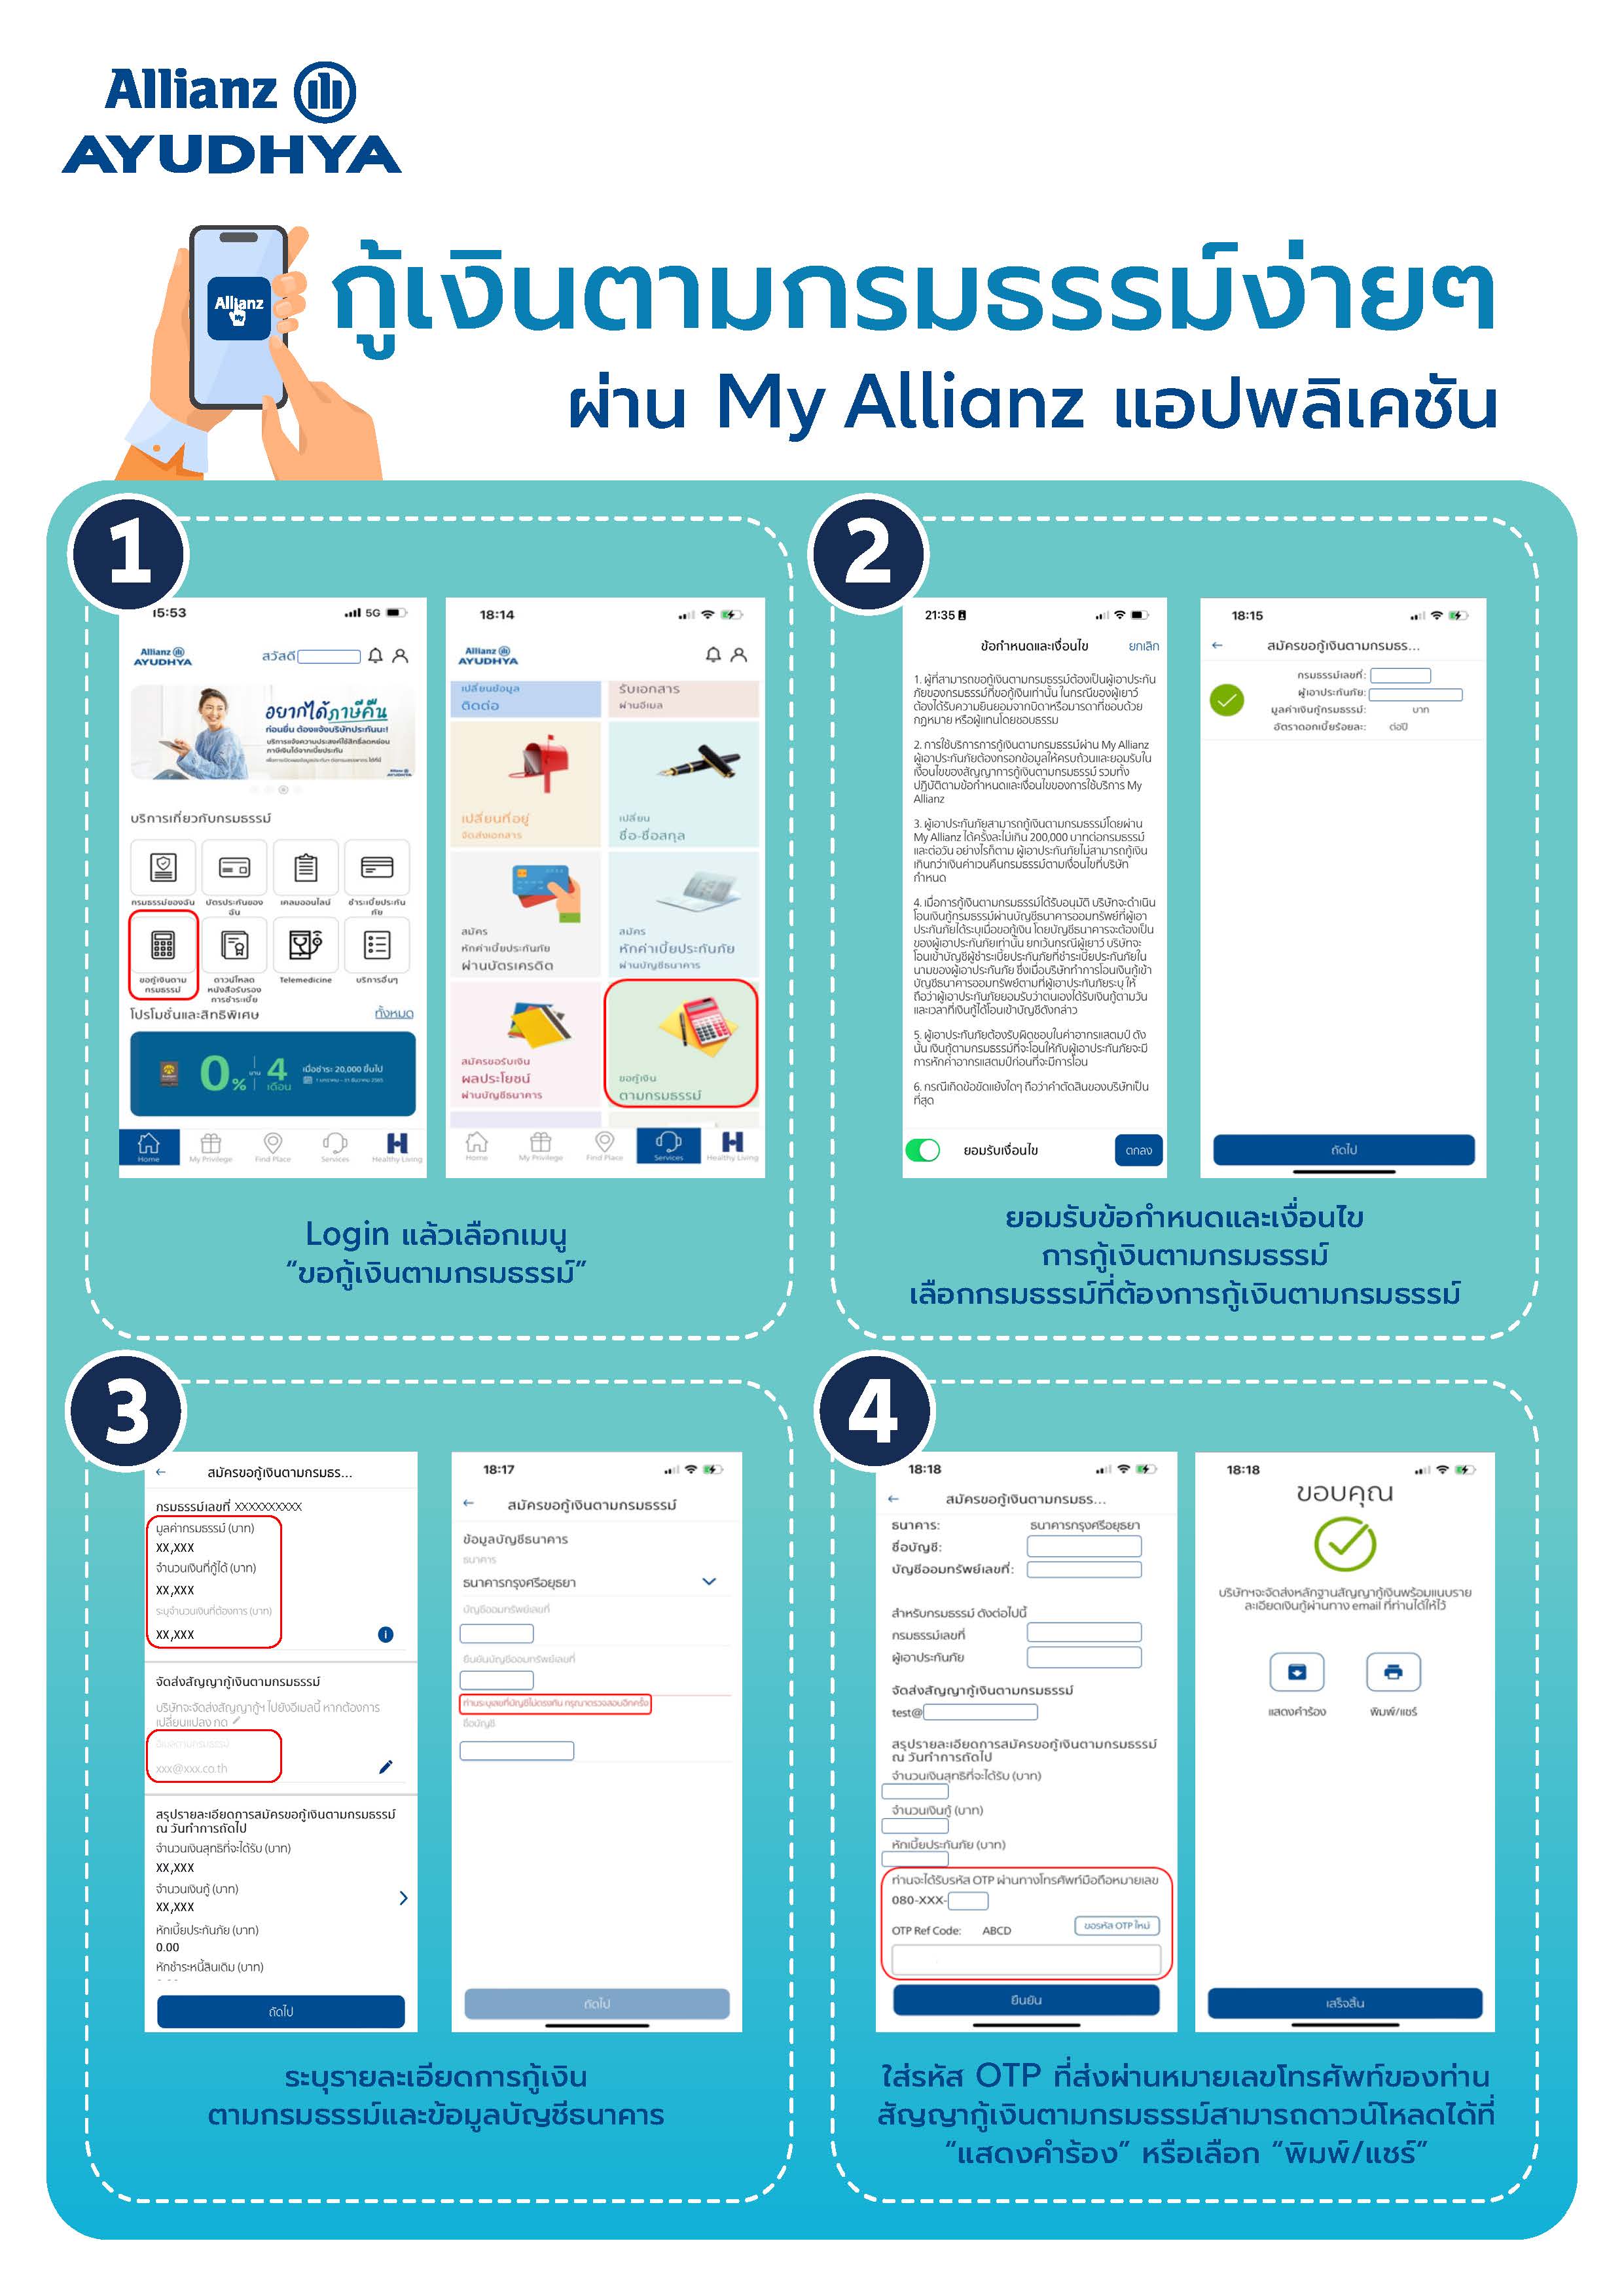 Policy Loan Service through My Allianz application